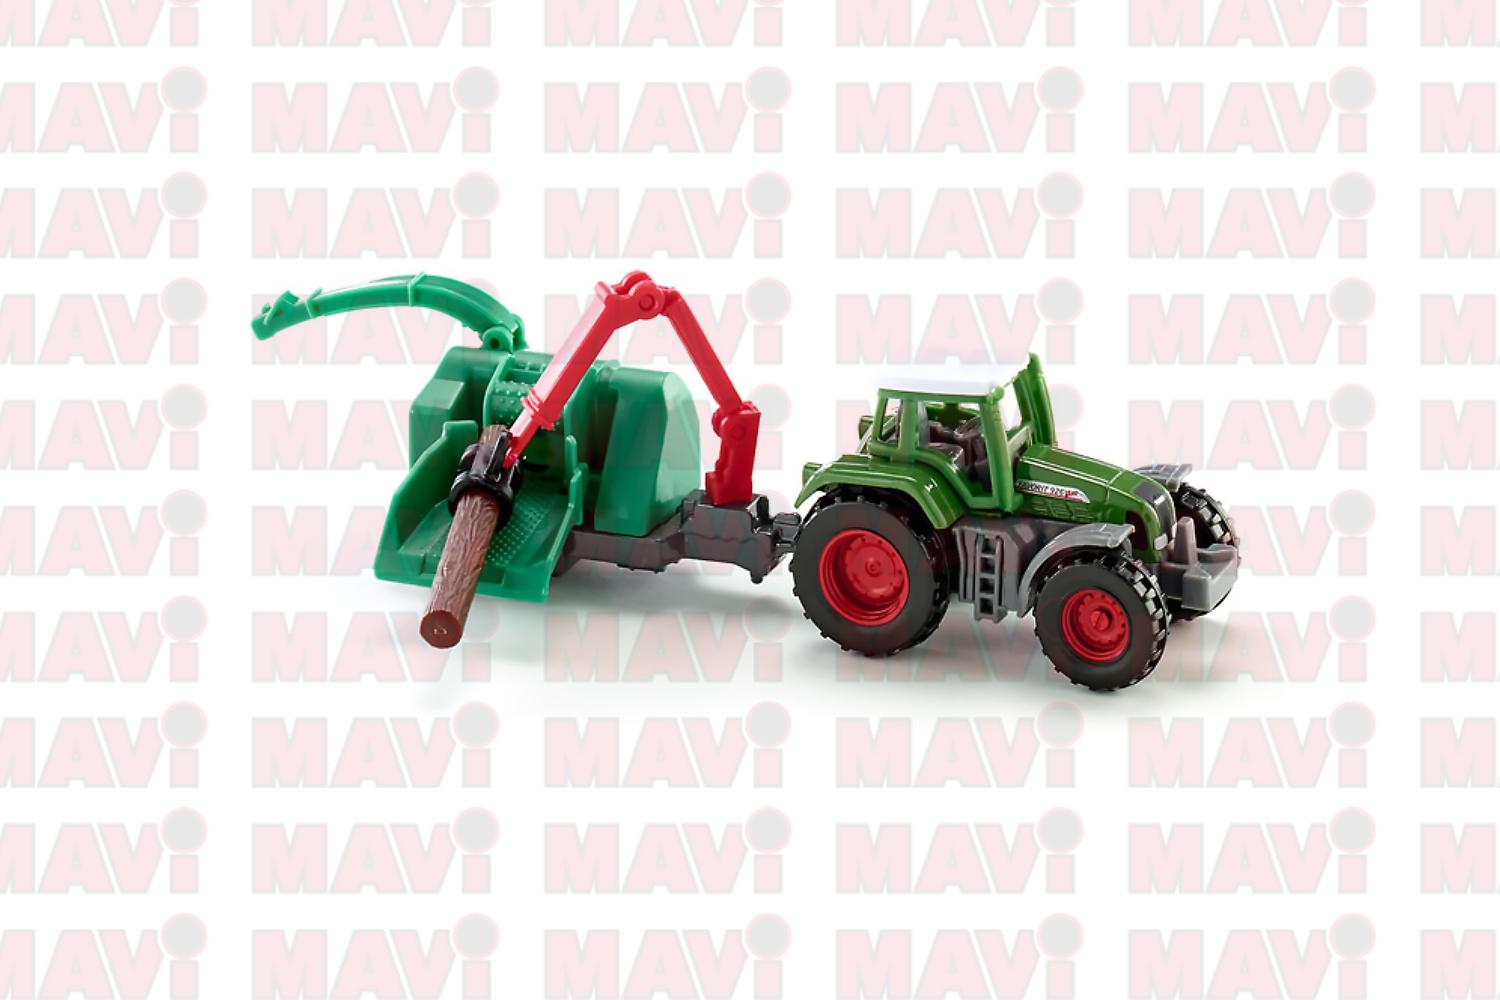 Jucarie Siku tractor cu tocatoare din lemn 1:87, 184x54x34 mm # 1675